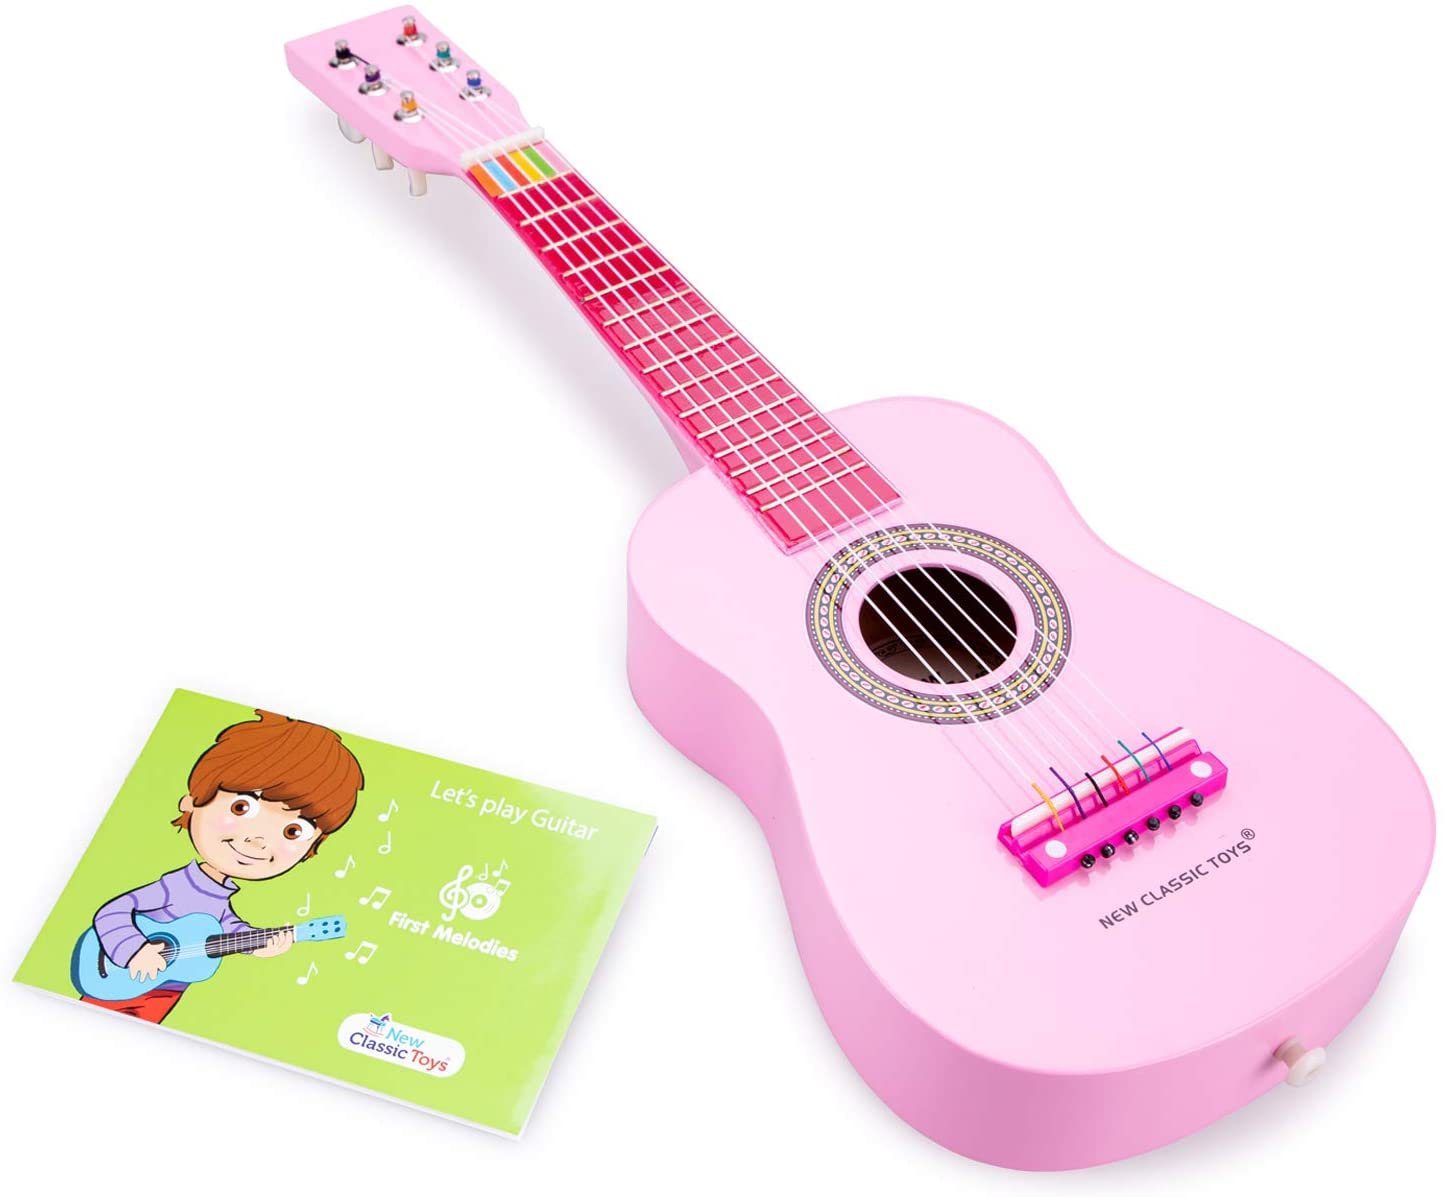 New Classic Toys® Spielzeug-Musikinstrument Kinder-Gitarre inkl. Musikbuch  • Holzgitarre • verschiedene Farben